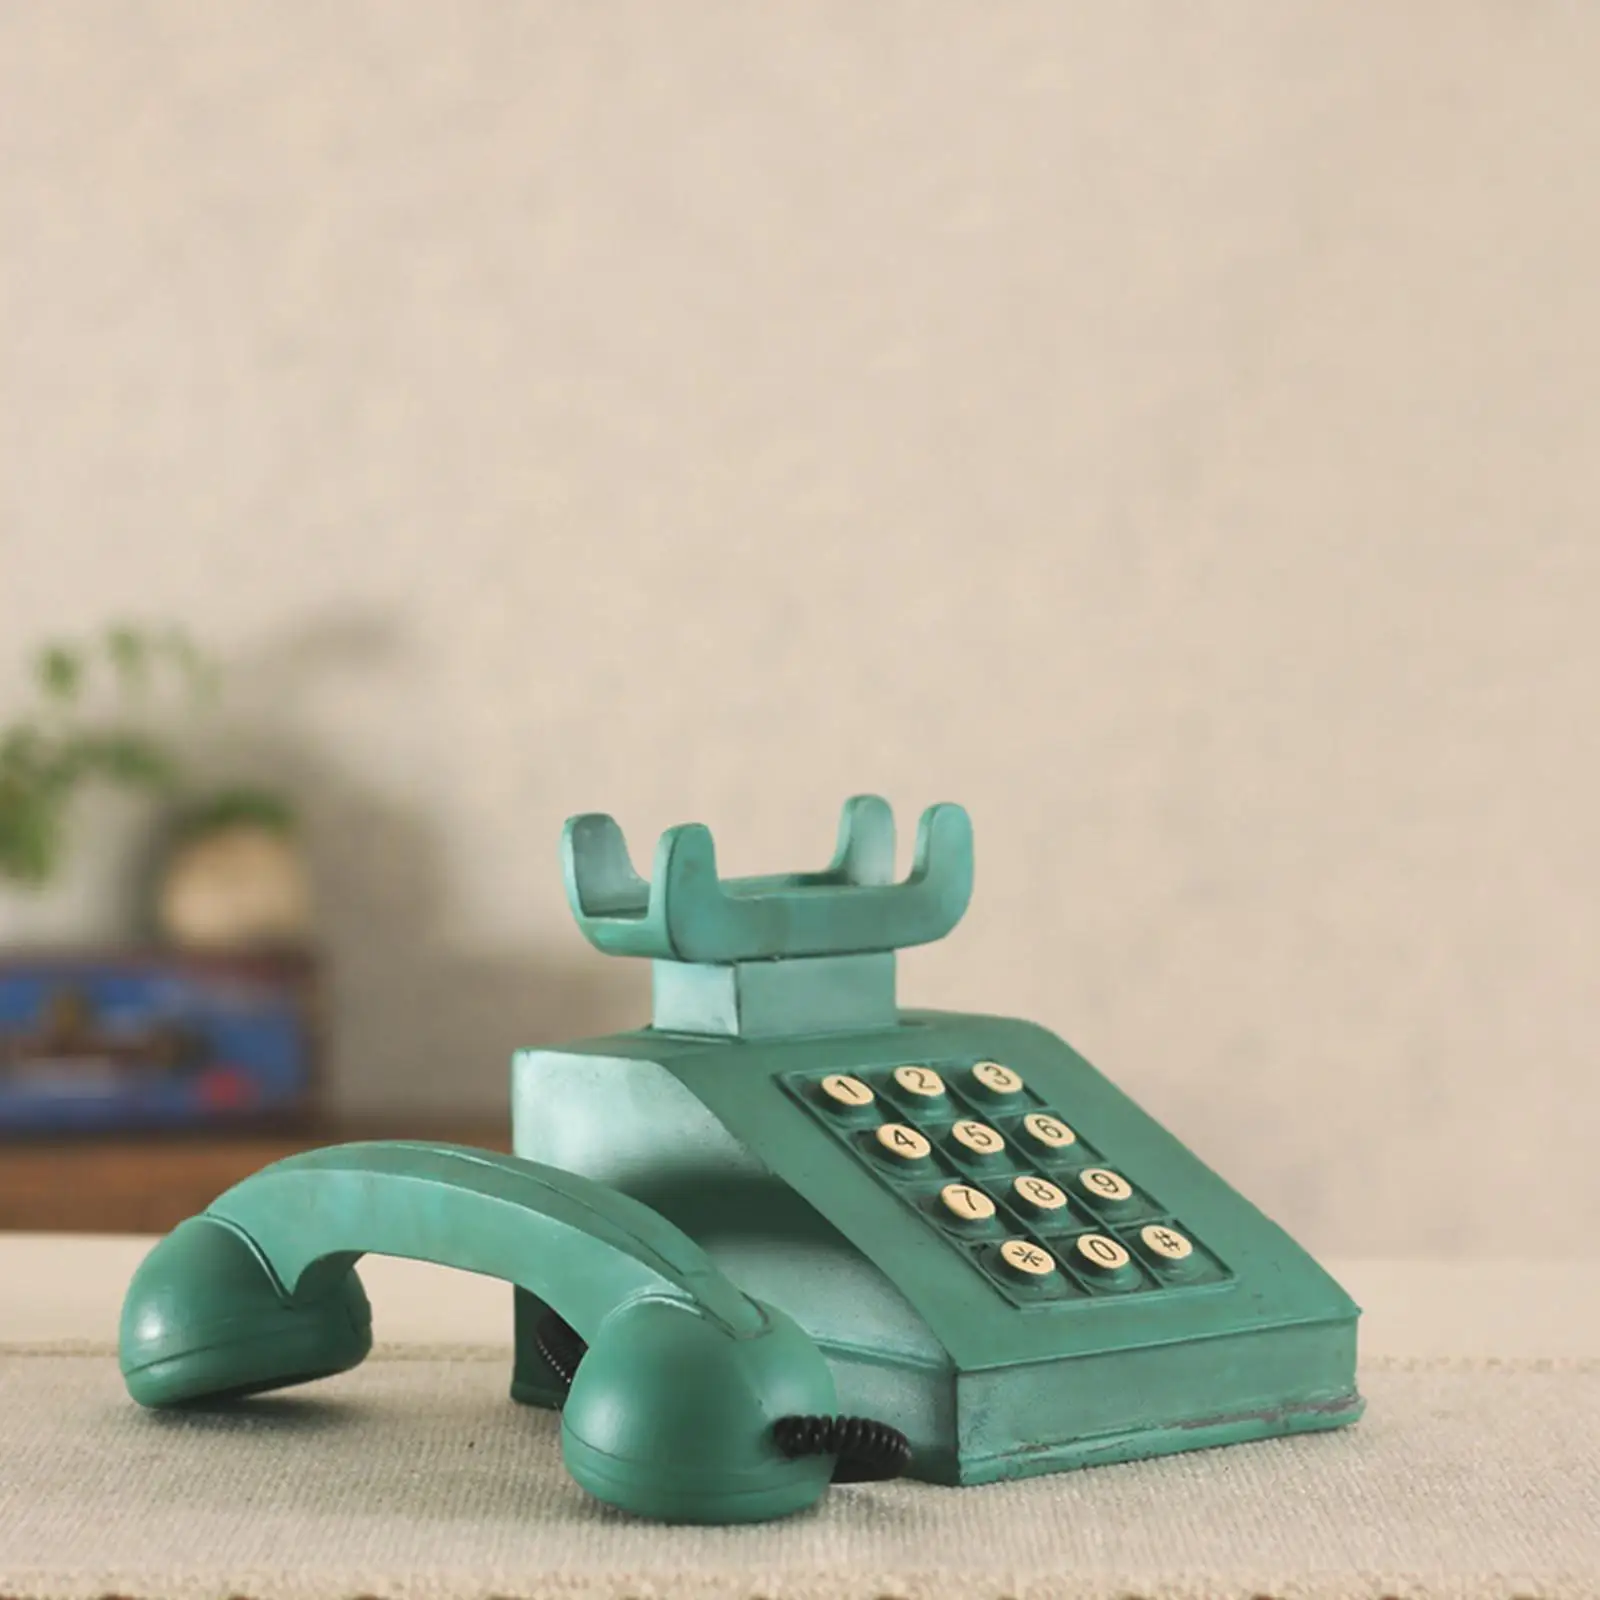 Classic American Telephone Model Statue for Hotel Desk Desktop